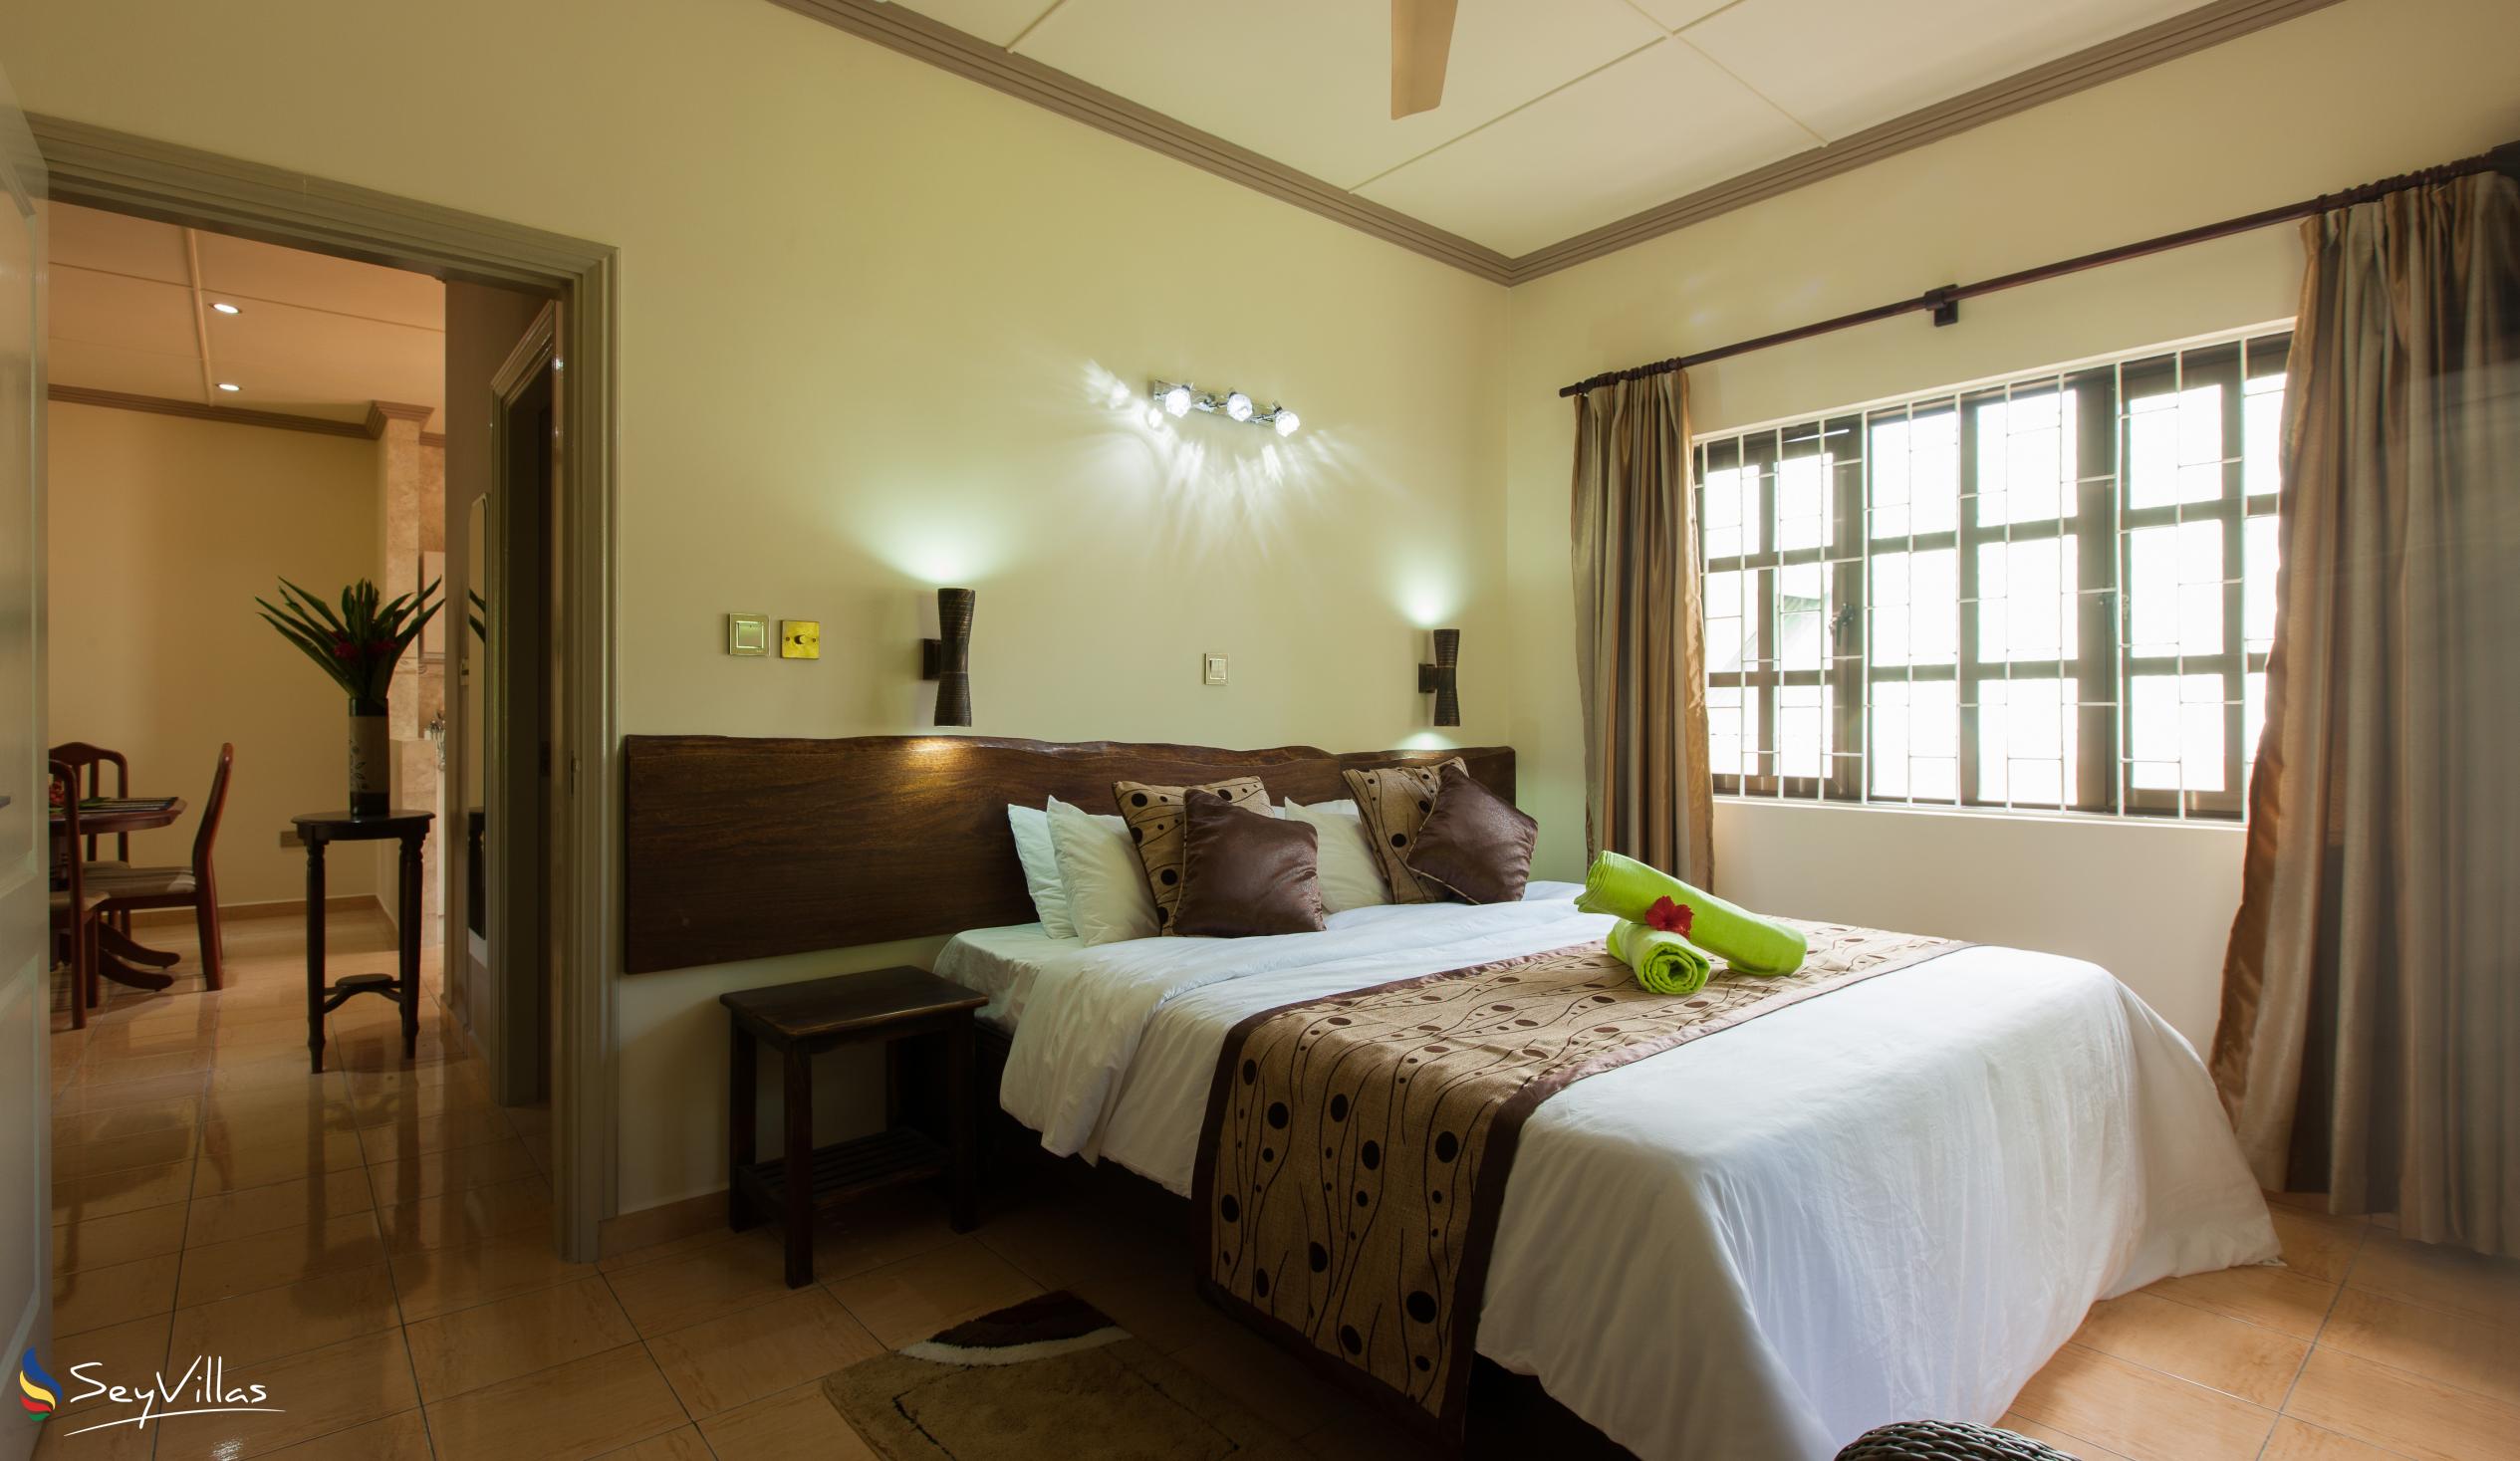 Foto 52: Chez Bea Villa - Appartement 2 chambres - Praslin (Seychelles)